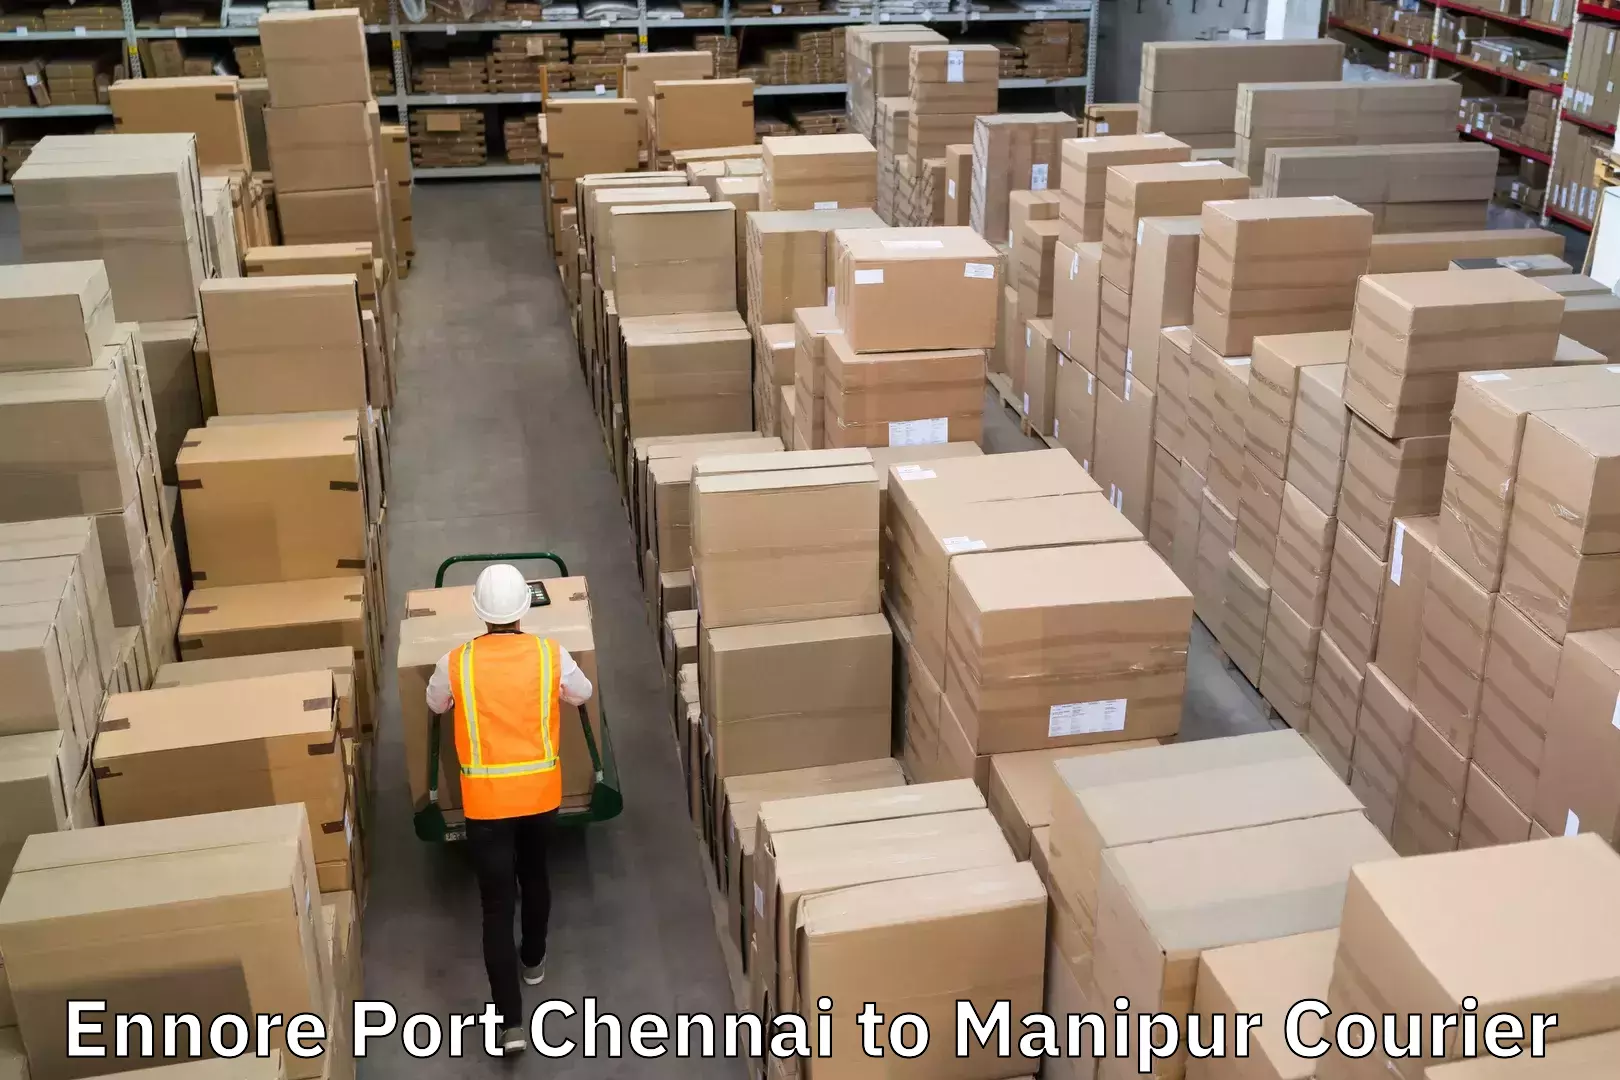 Digital courier platforms Ennore Port Chennai to Manipur